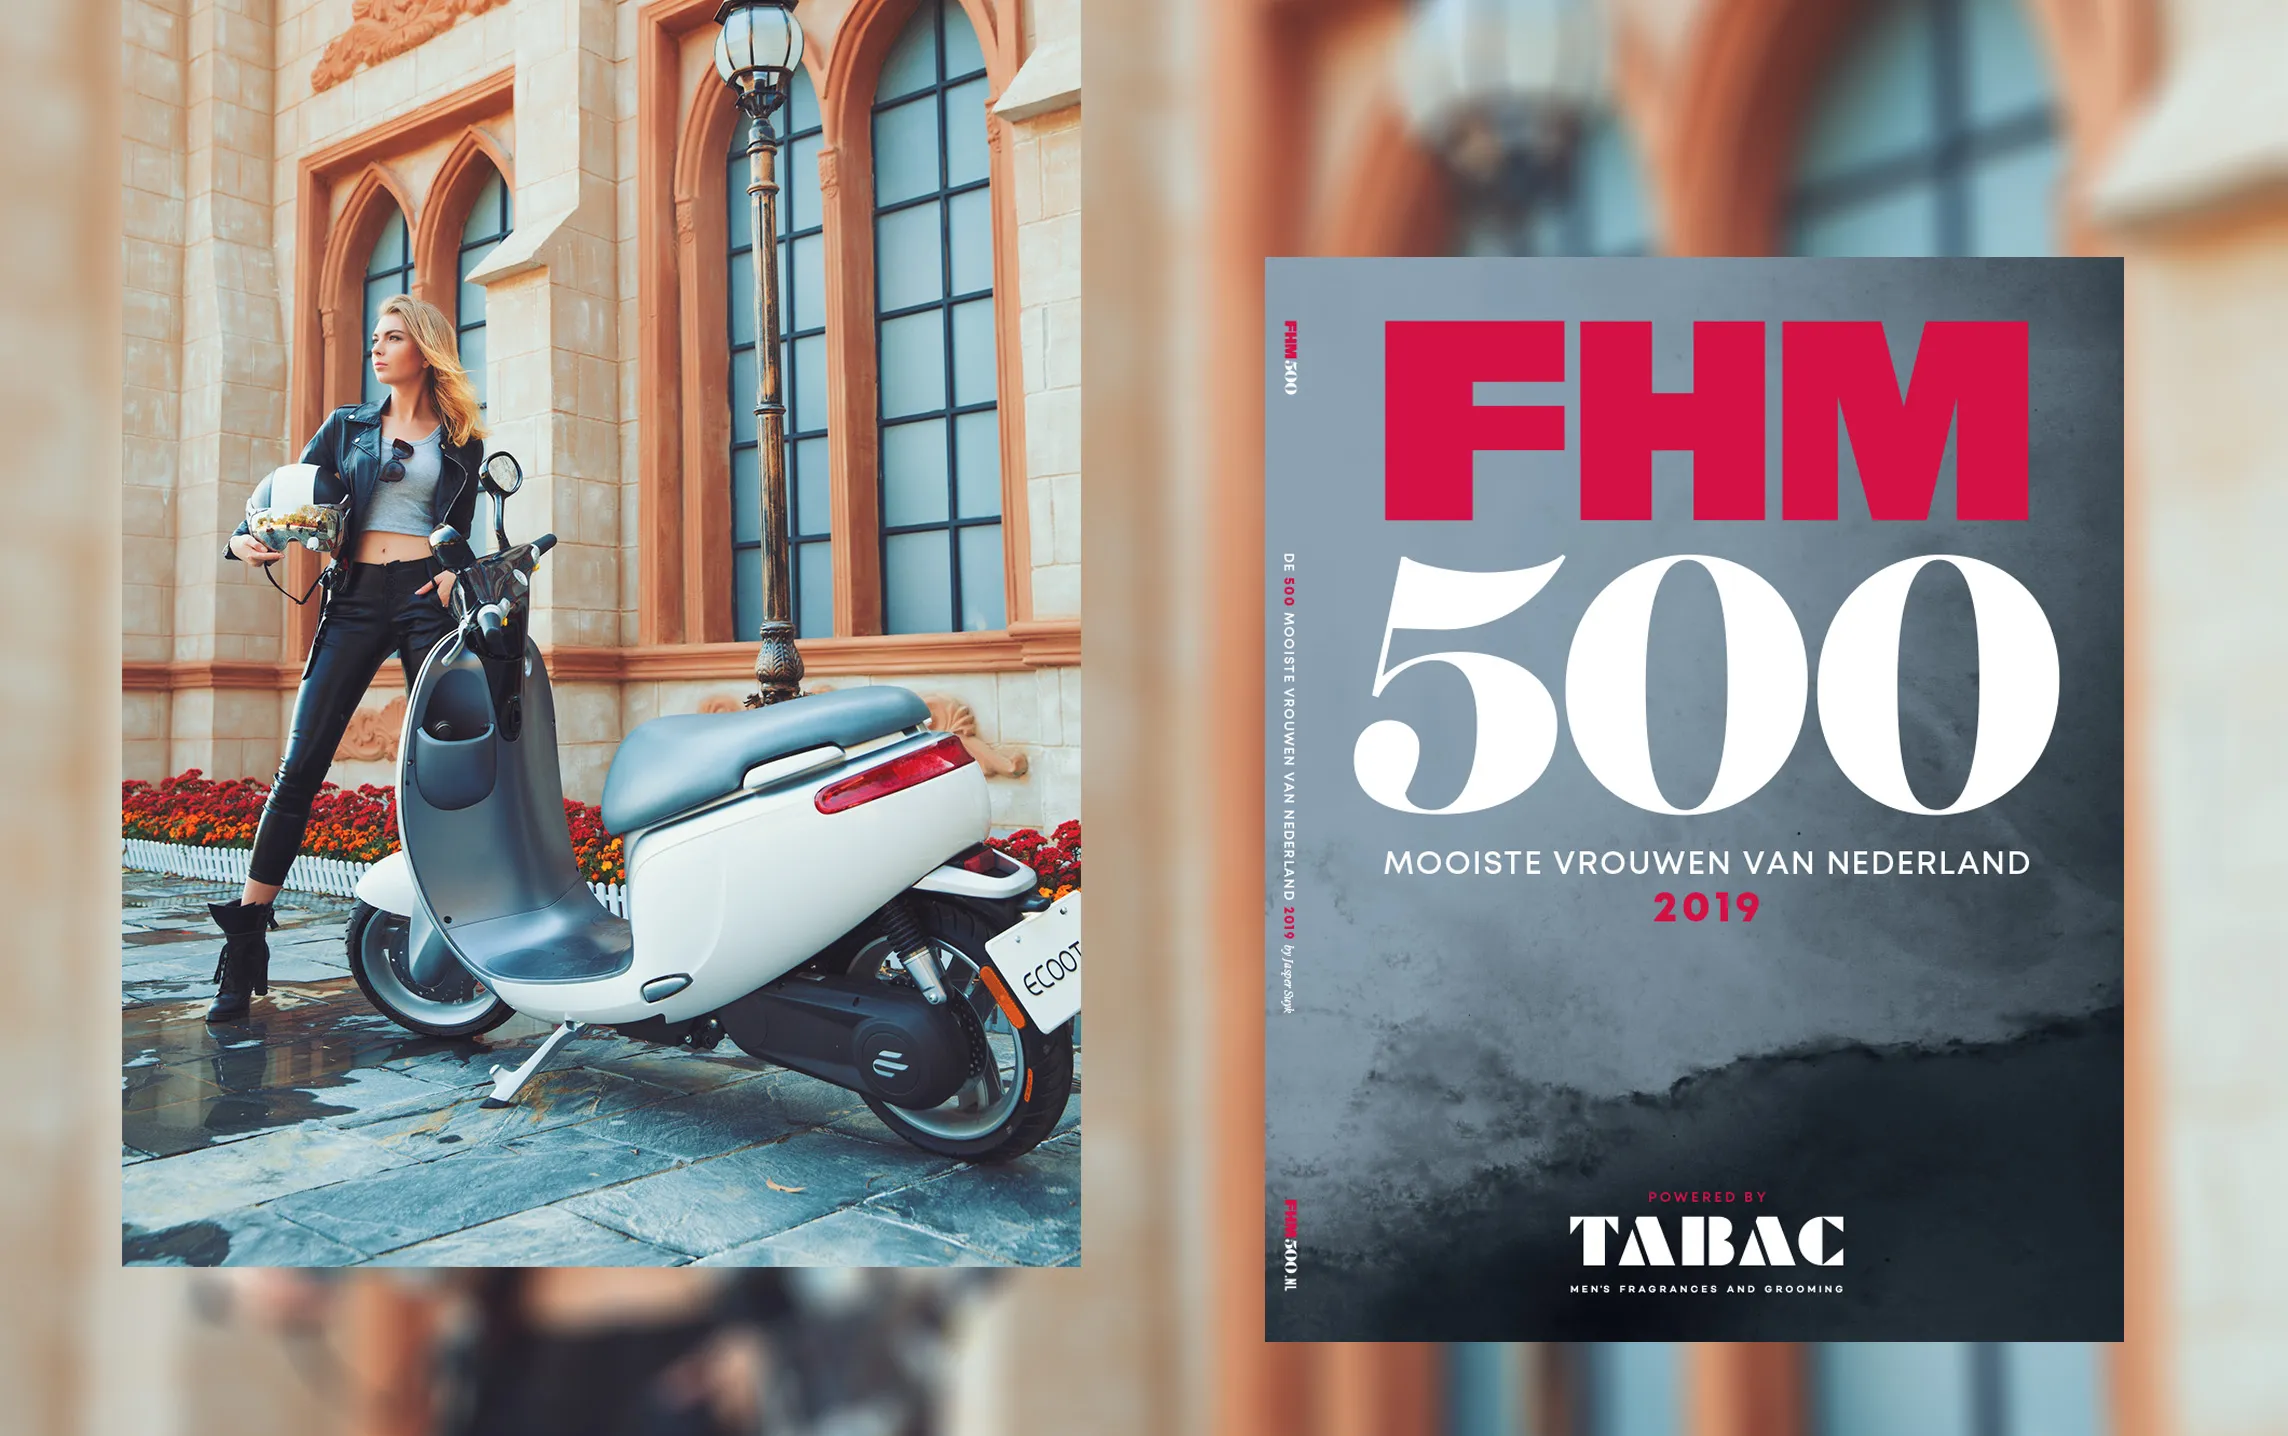 scooter en magazine fhm500 edit 4 jpg